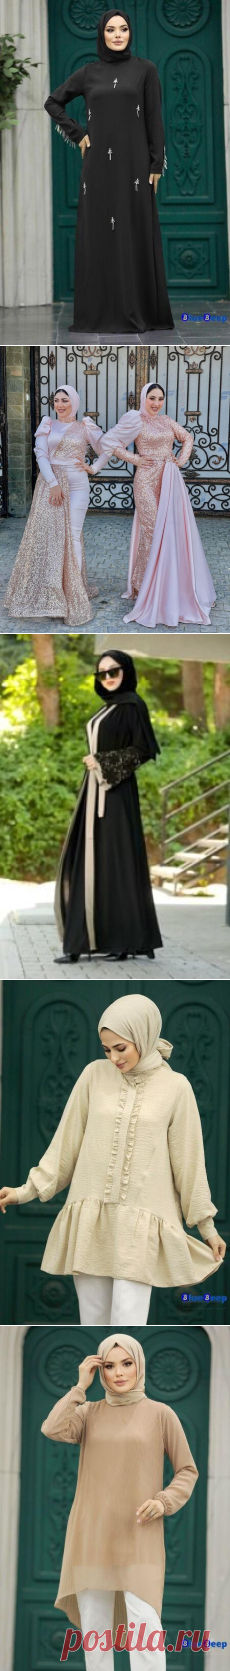 Discover Hijab Soiree Dresses on Pinterest: Inspiring Fashion Ideas